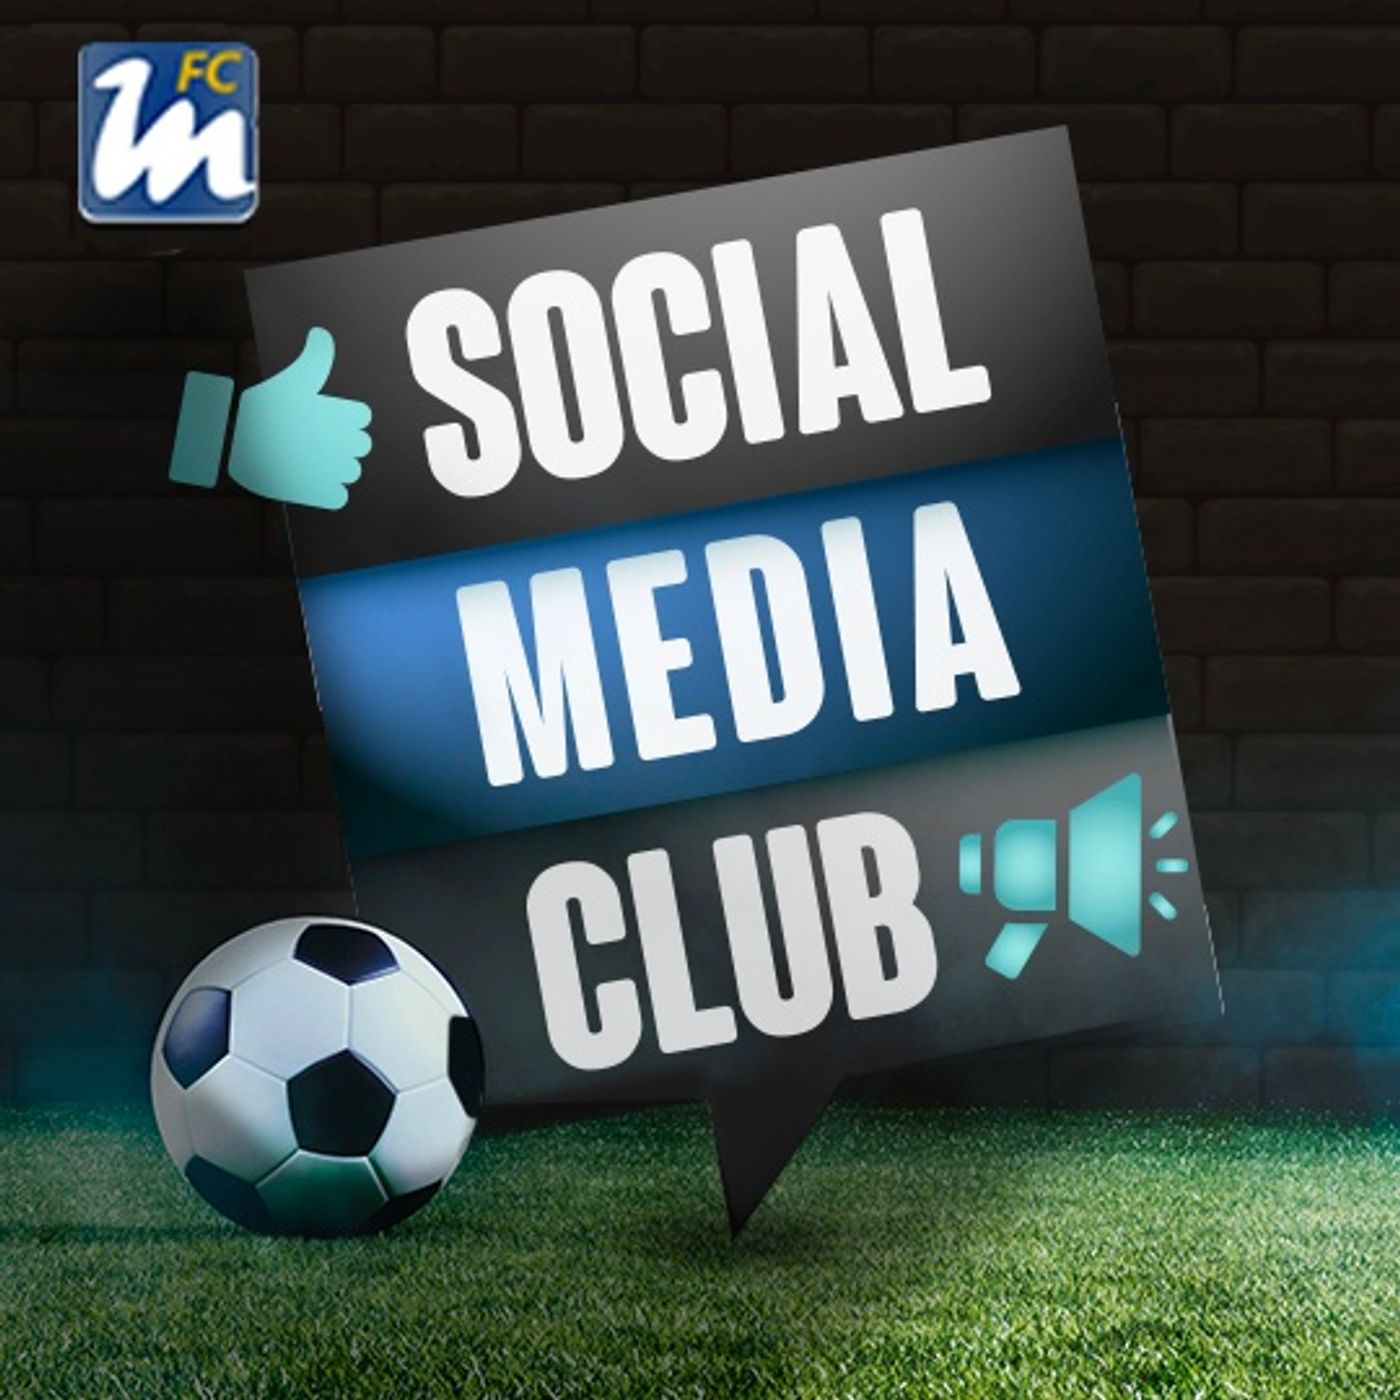 Episodio Social Media Club - 30/08/2022